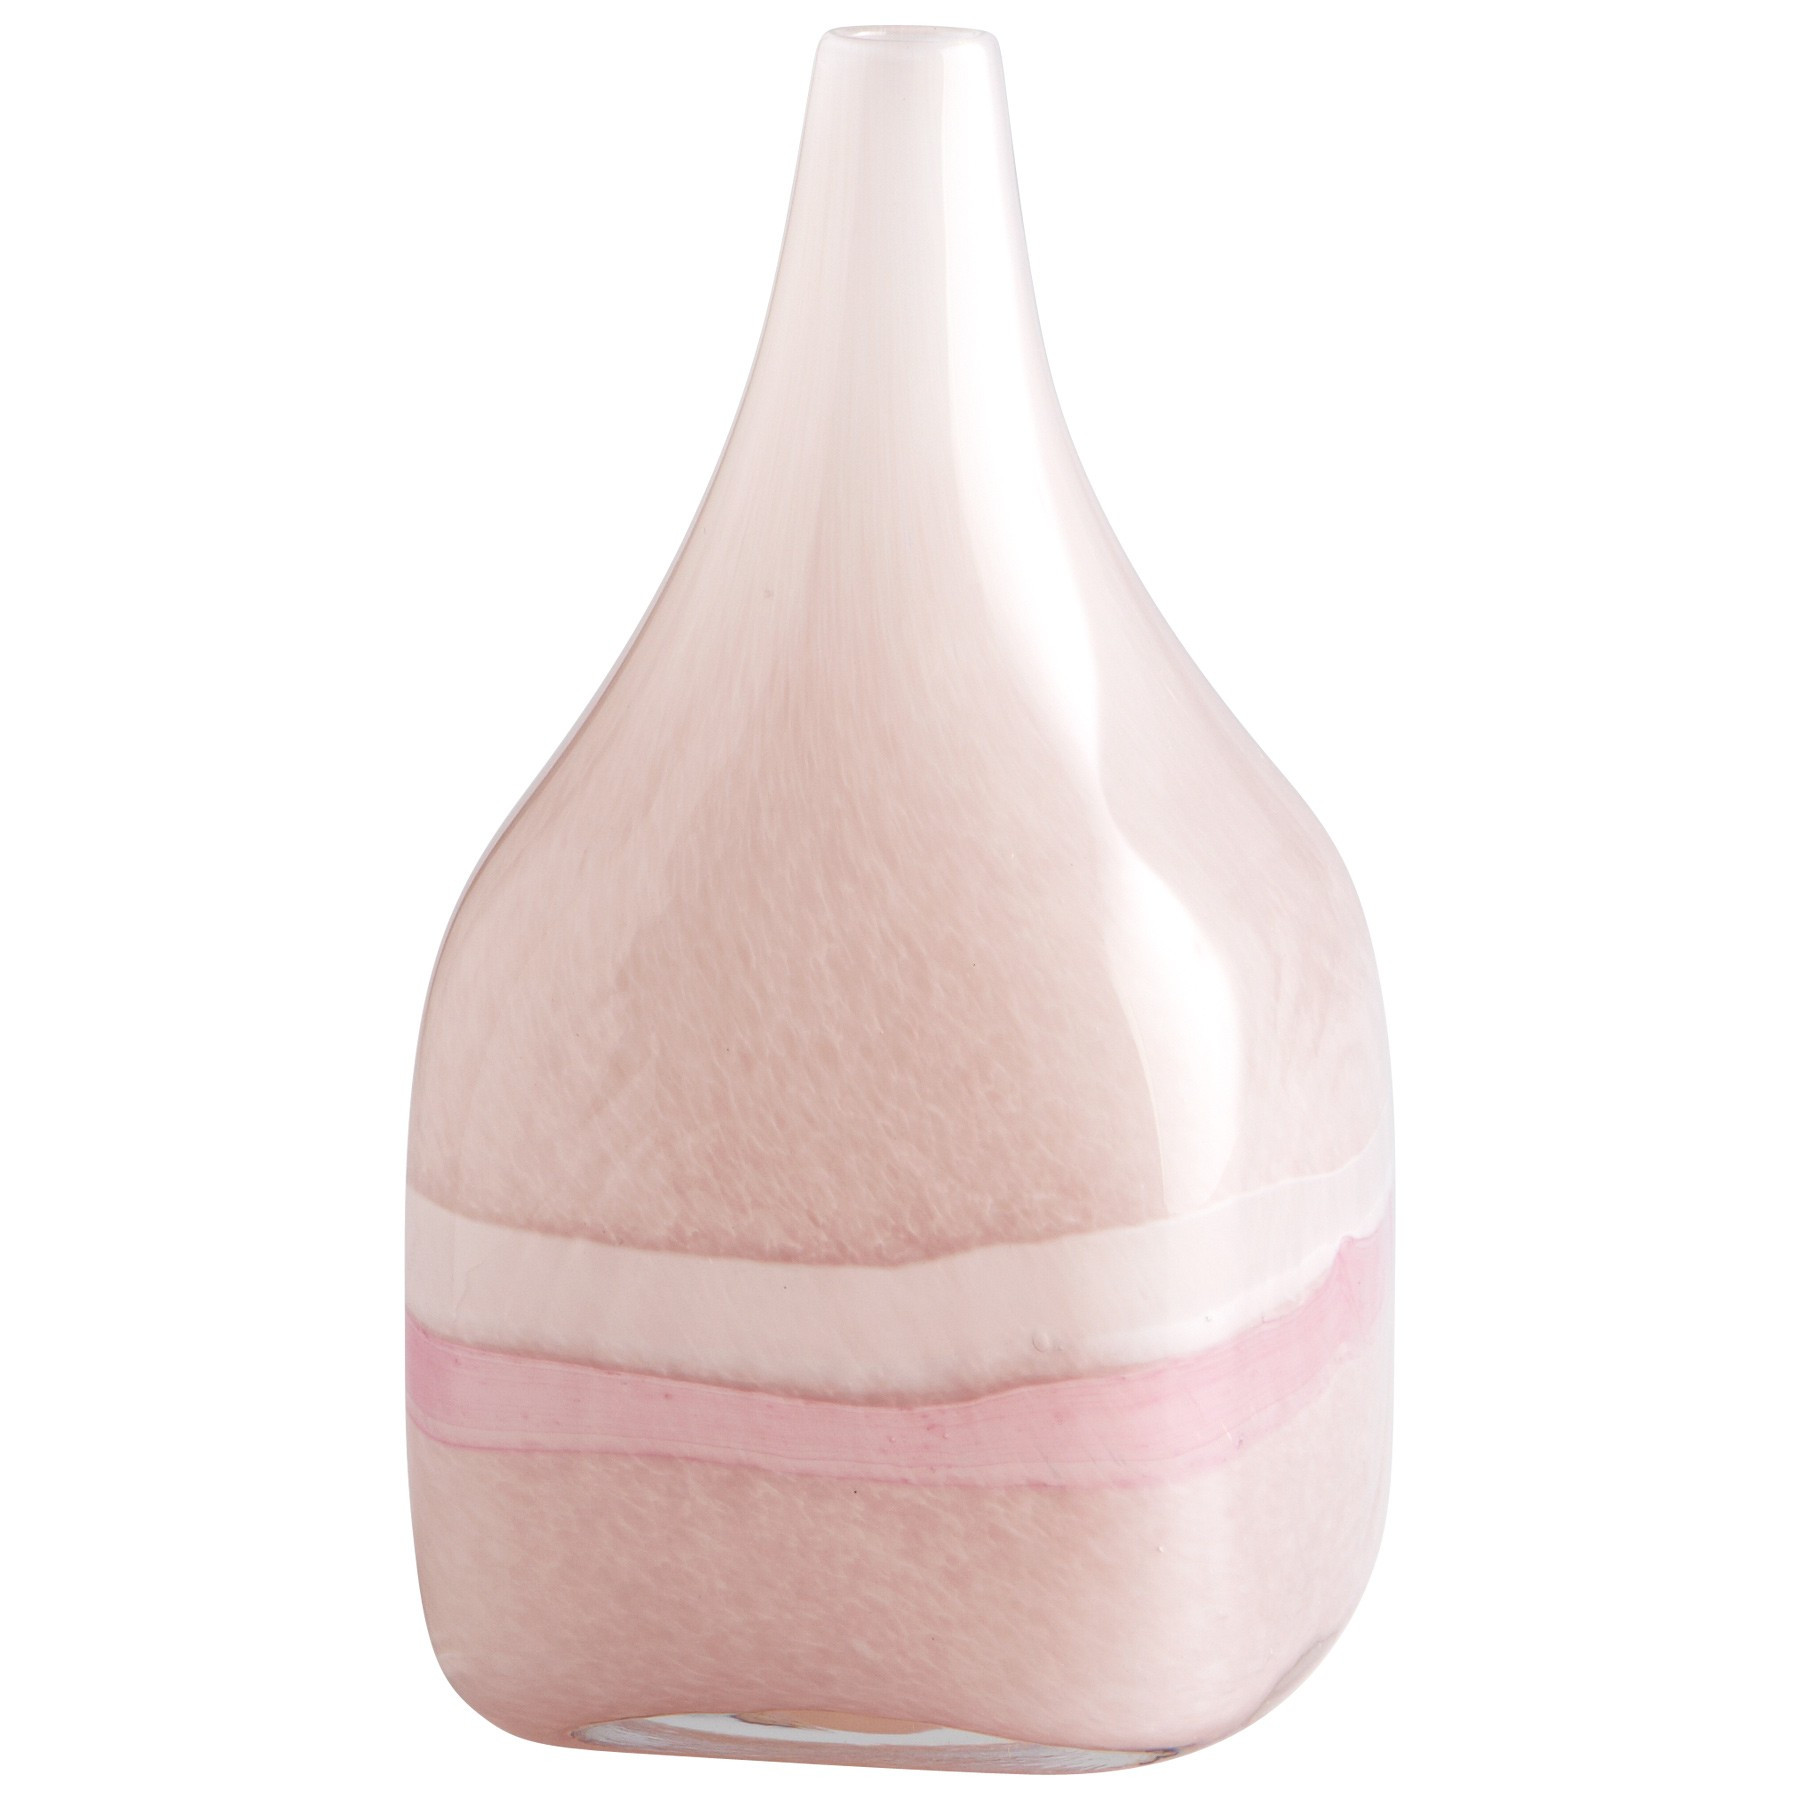 26 Nice Small Plastic Bud Vases 2024 free download small plastic bud vases of carter vase with carter vase m